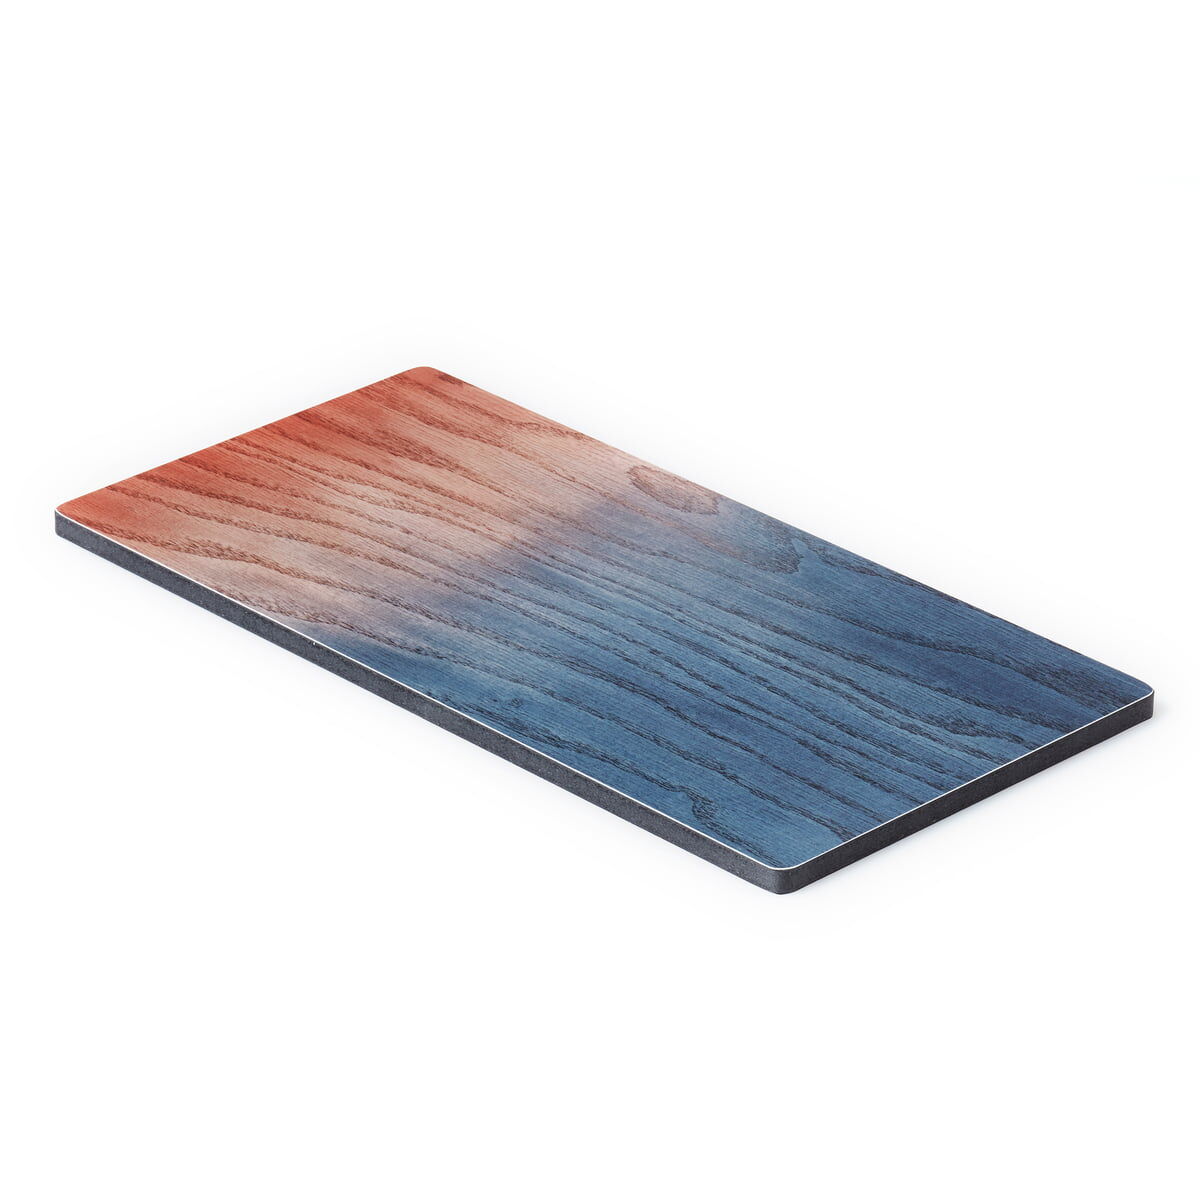 applicata - A Tribute to Wood Tapas Board small, blau / rot